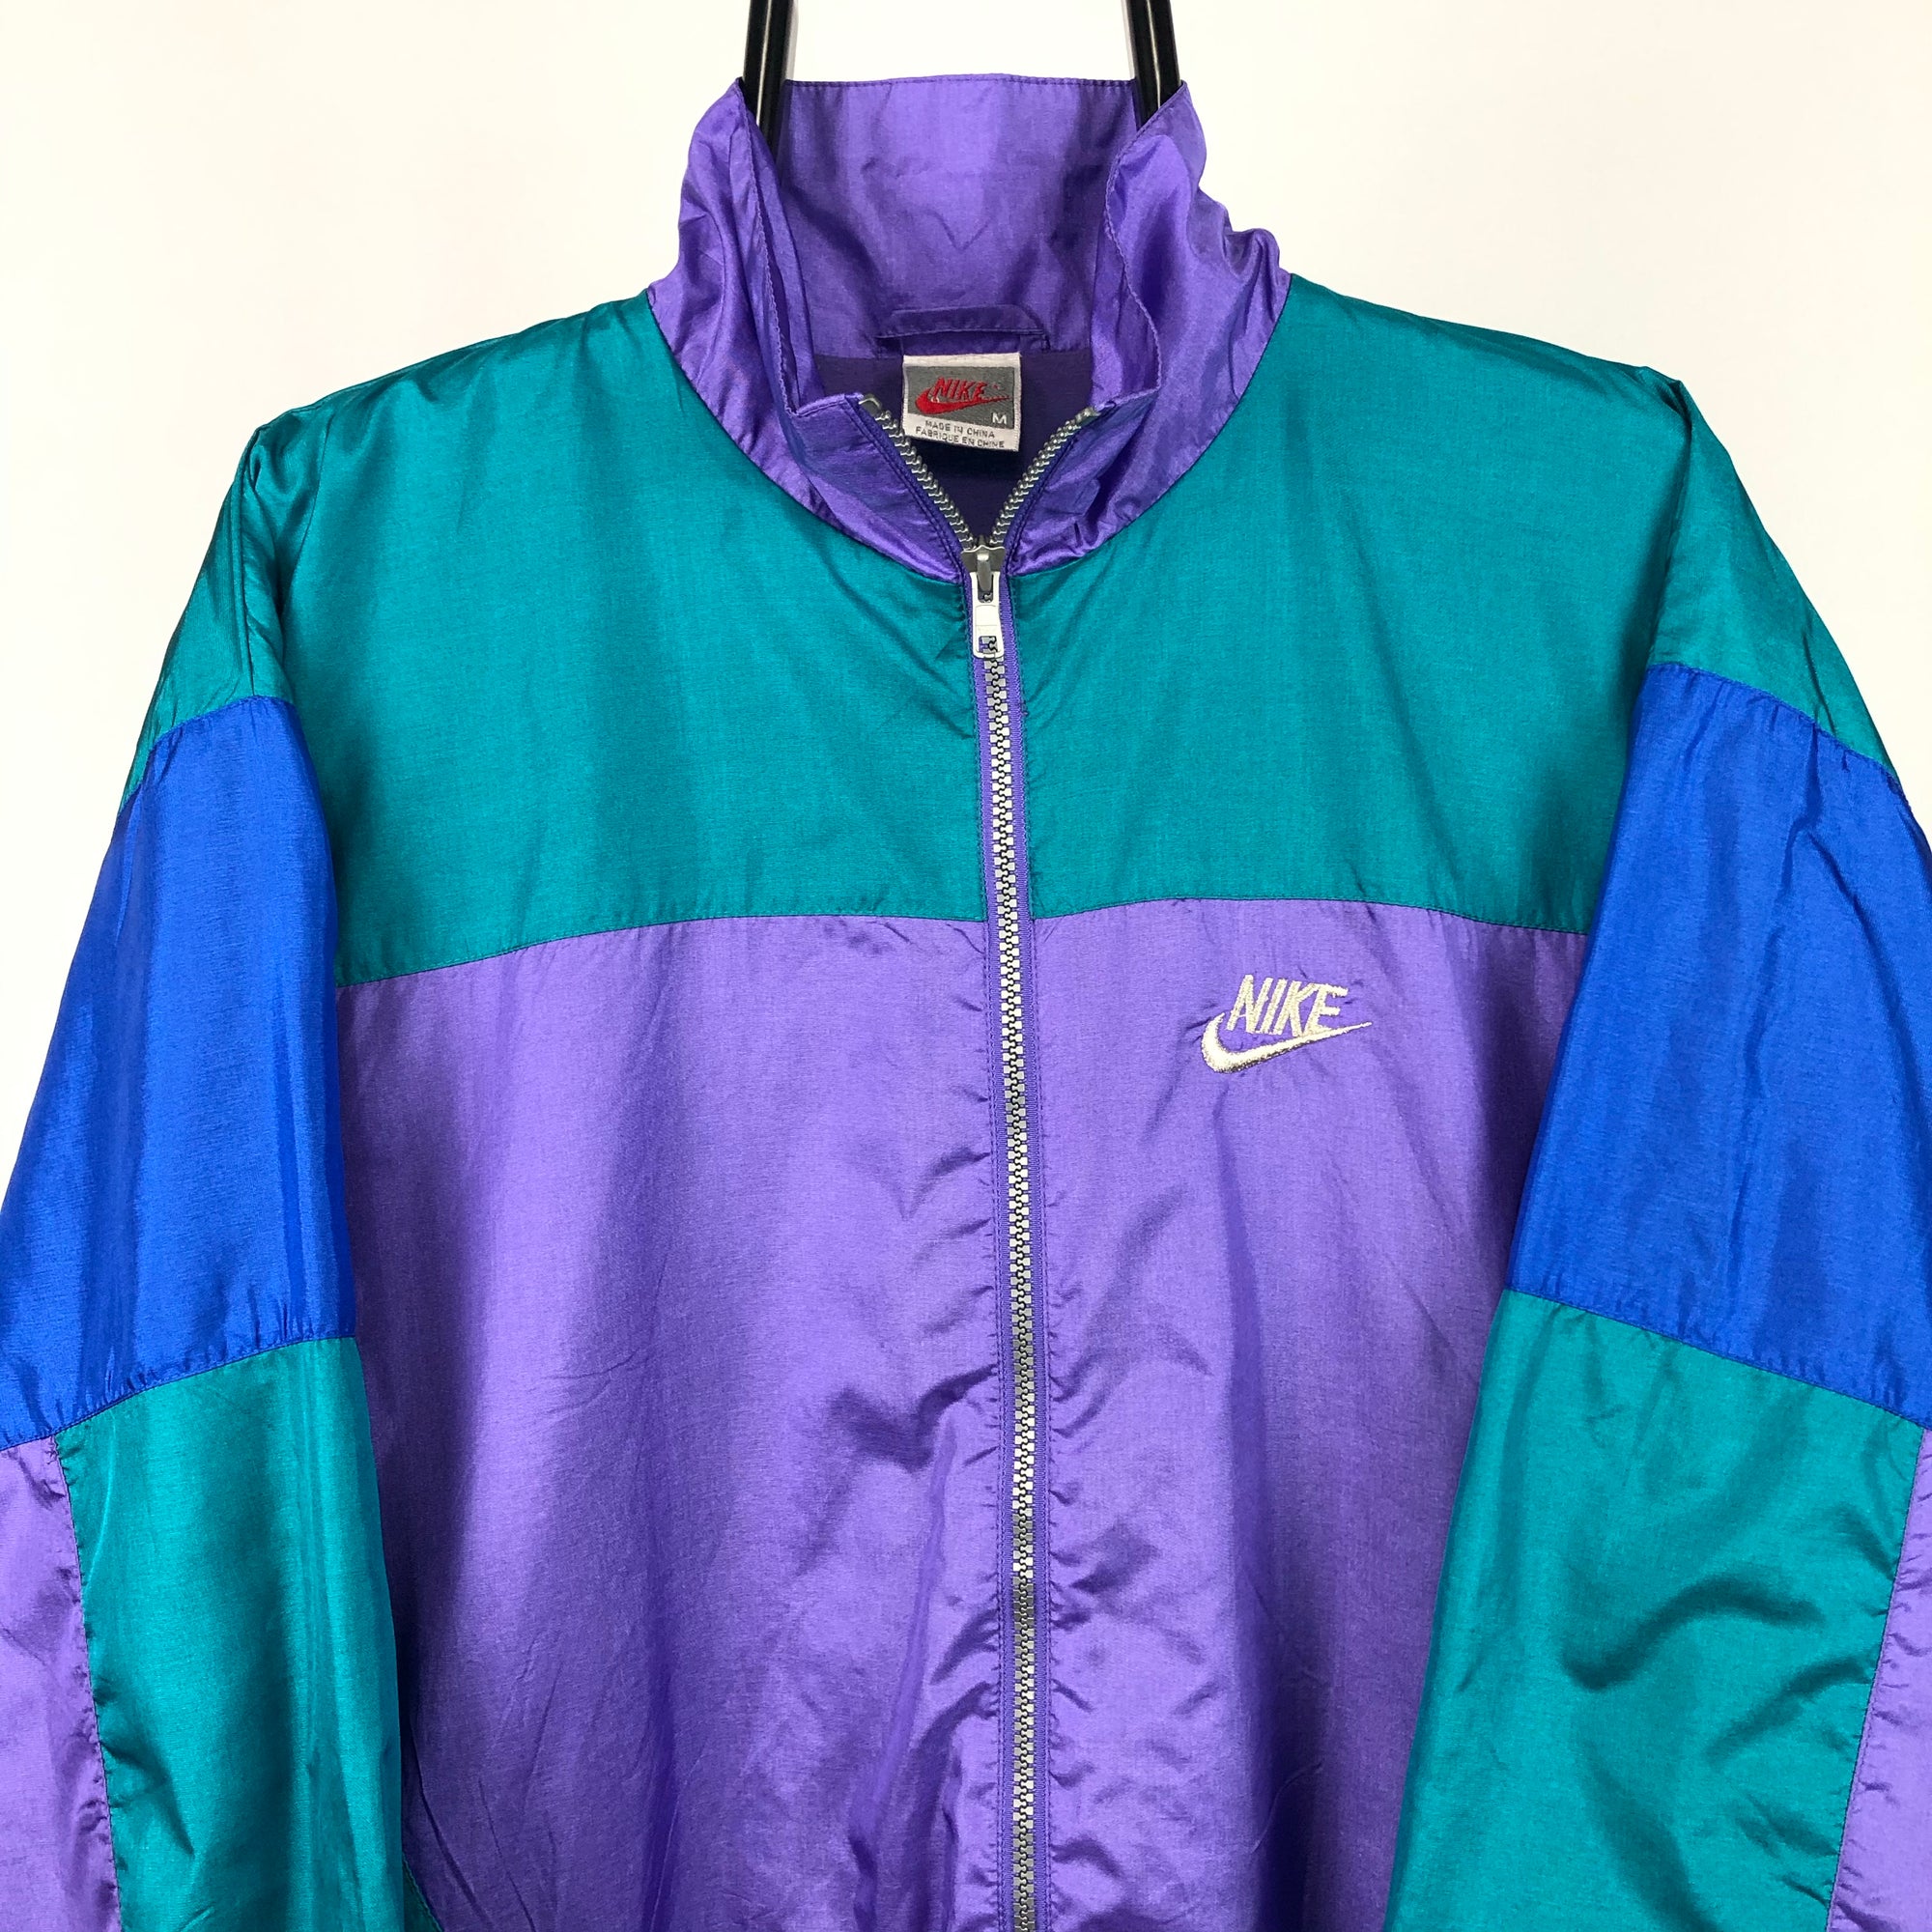 Vintage 80s Nike Shell Jacket - Men’s Medium/Women’s Large